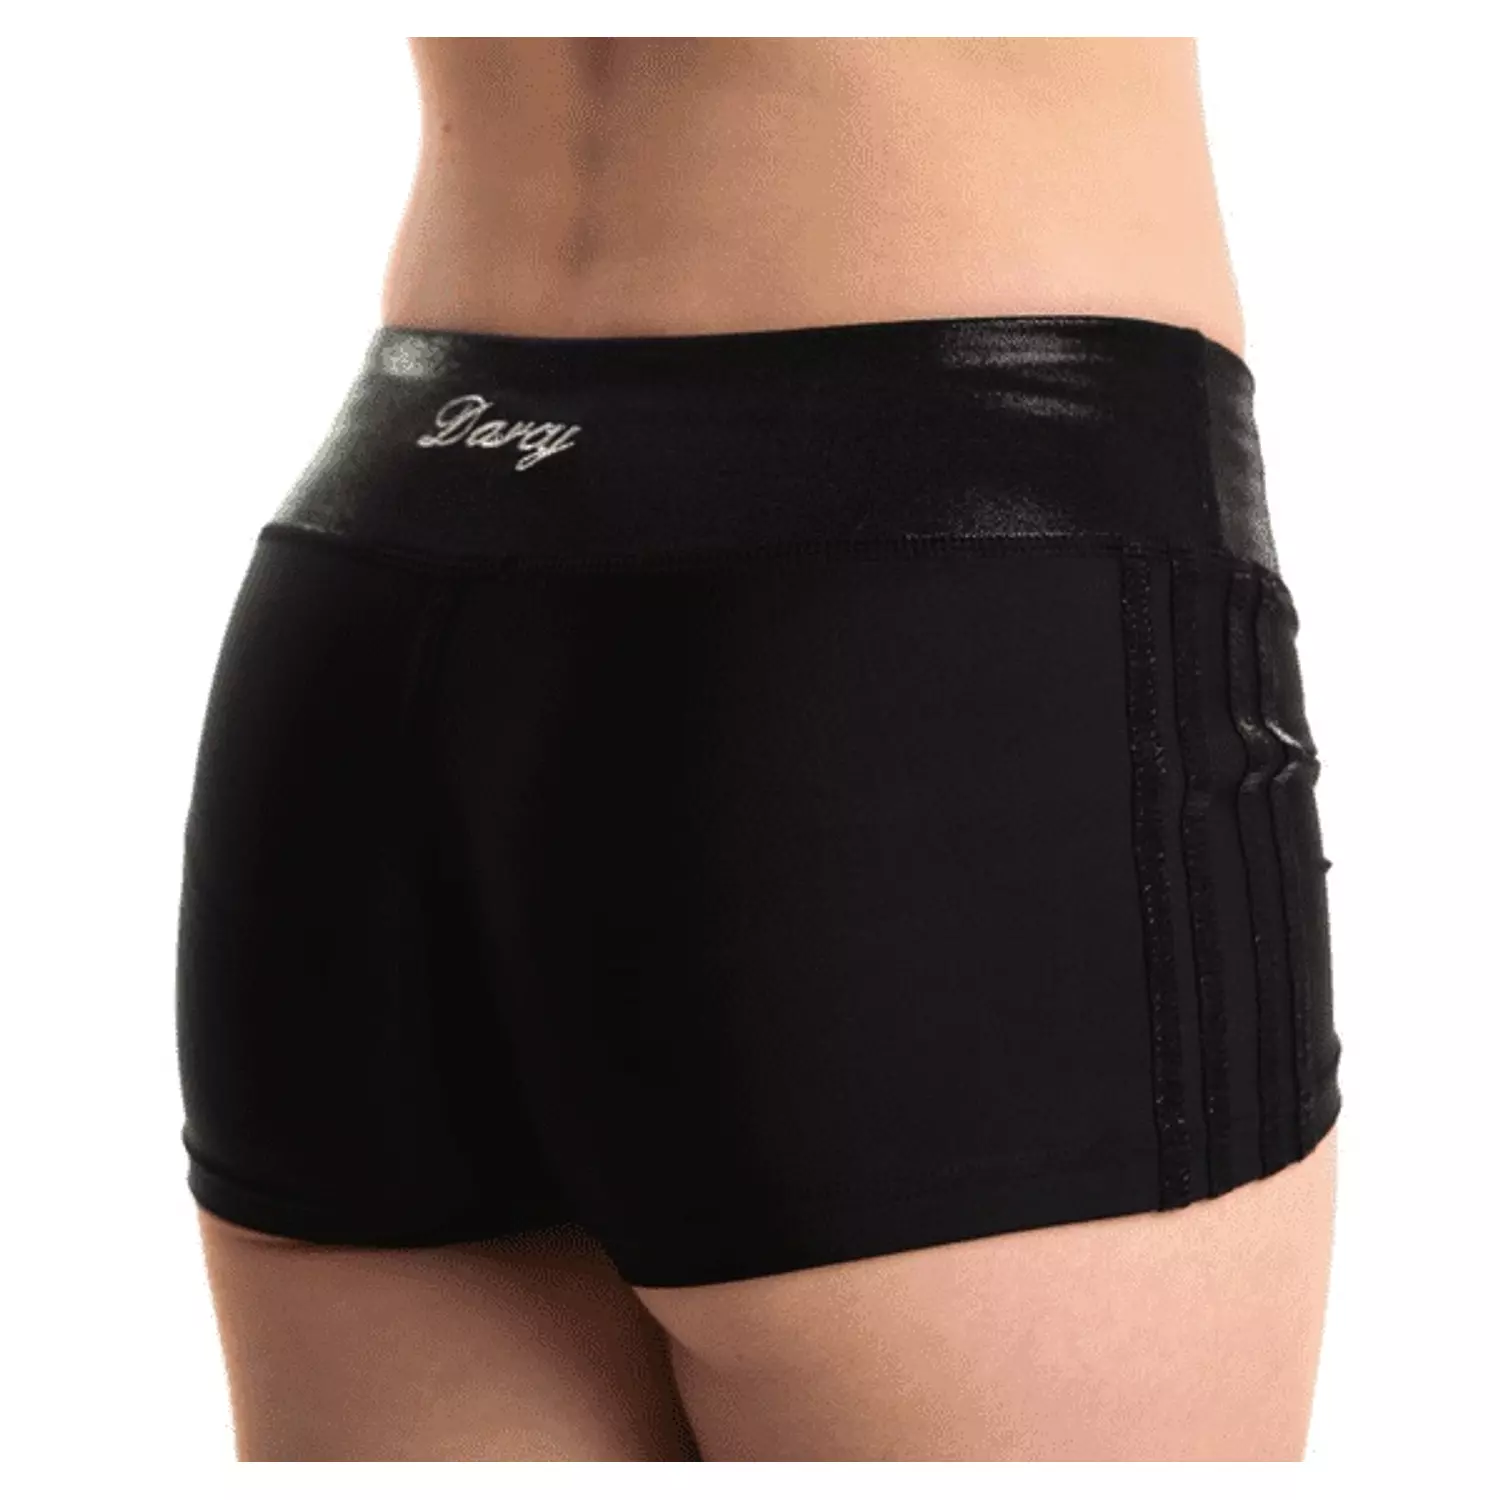 Darcy-Lycra/Mystique 4 Stripe Shorts - Black hover image